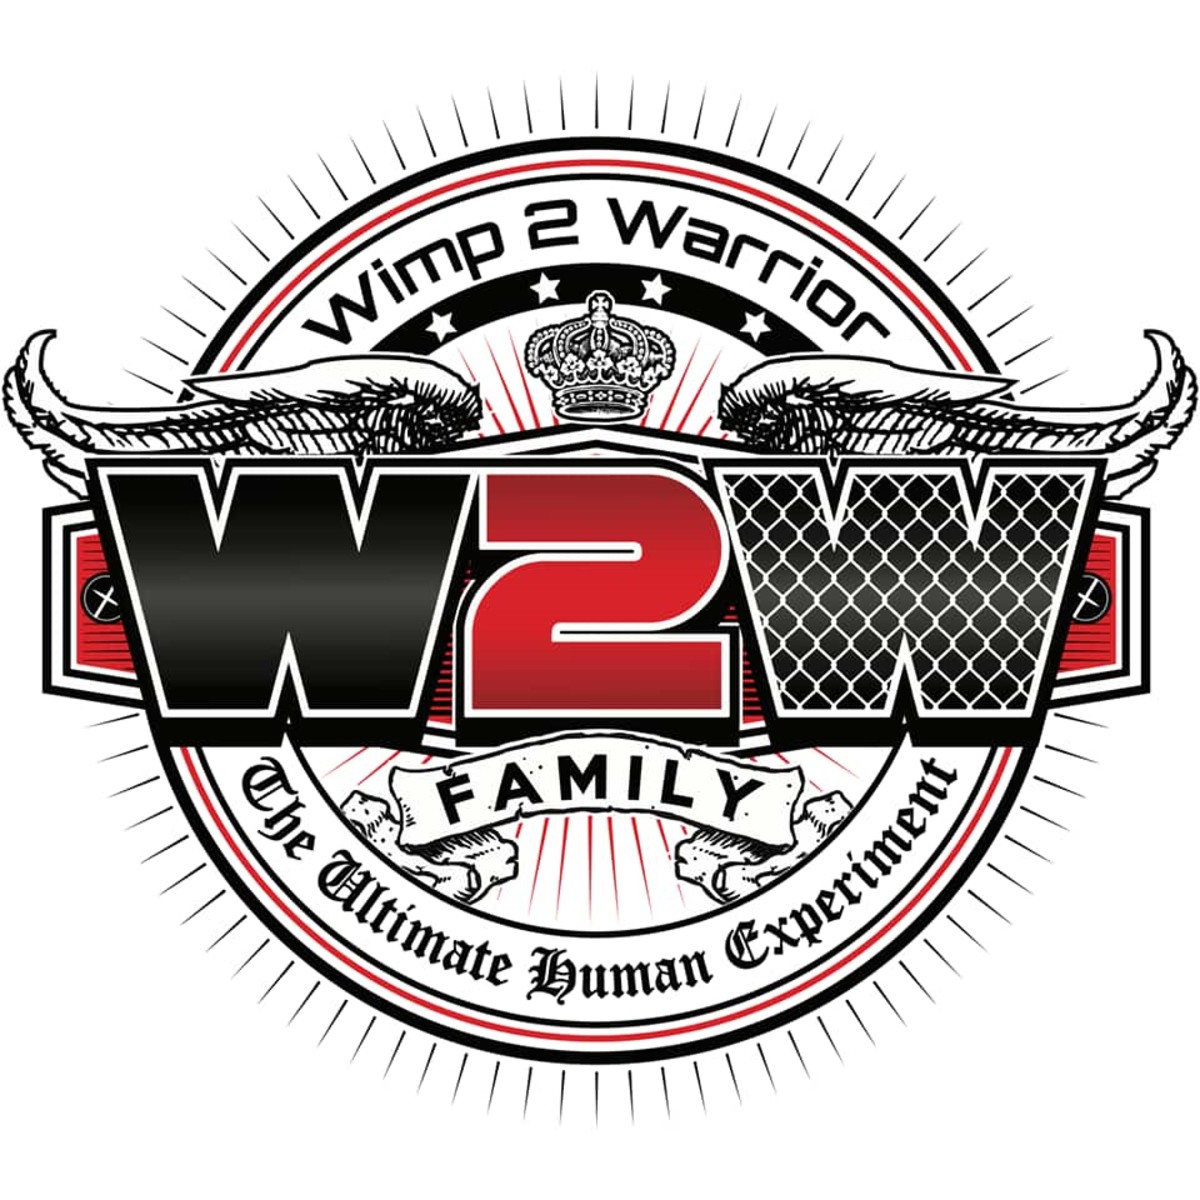 wimp logo